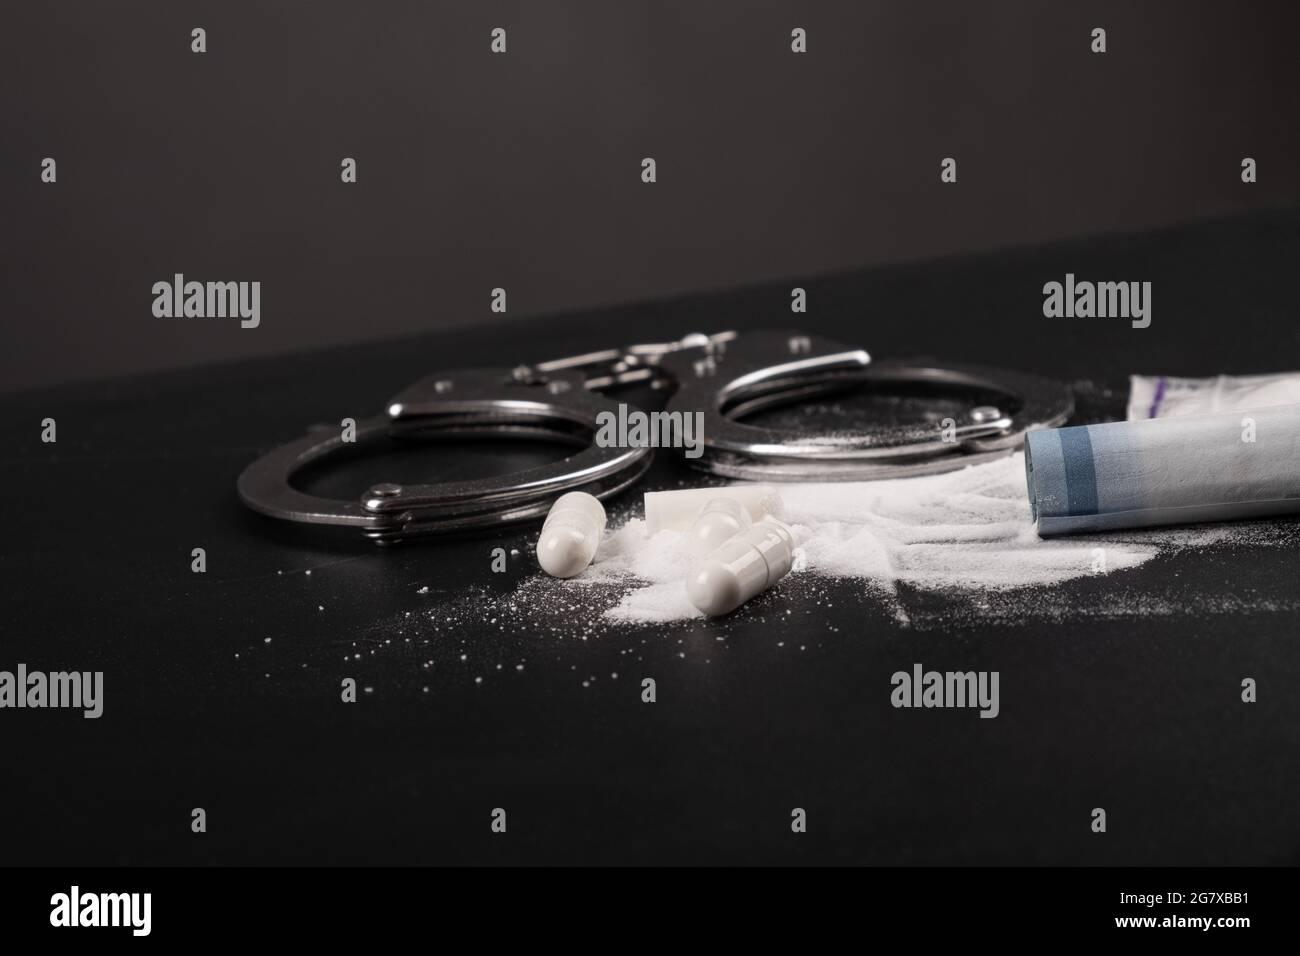 Festnahme wegen Drogenhandels, Handschellen und weißem Puderkokain. Stockfoto